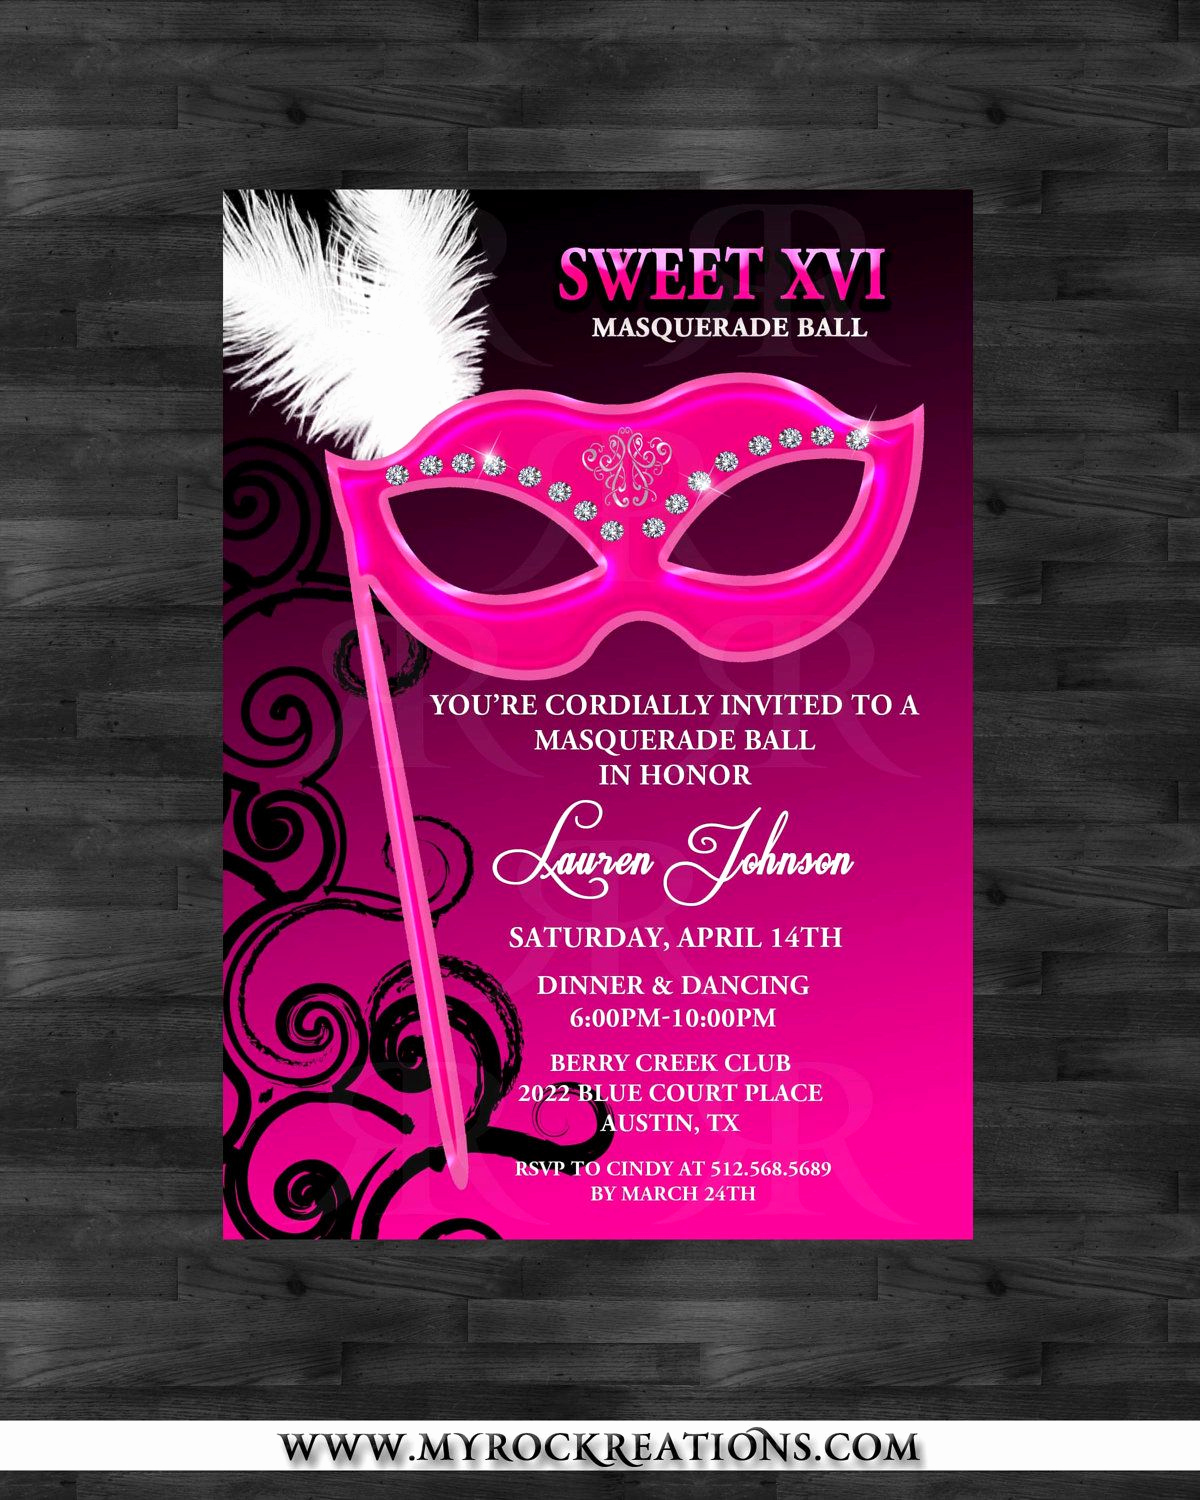 Sweet 15 Invitation Cards Elegant Sweet 16 Masquerade On Pinterest